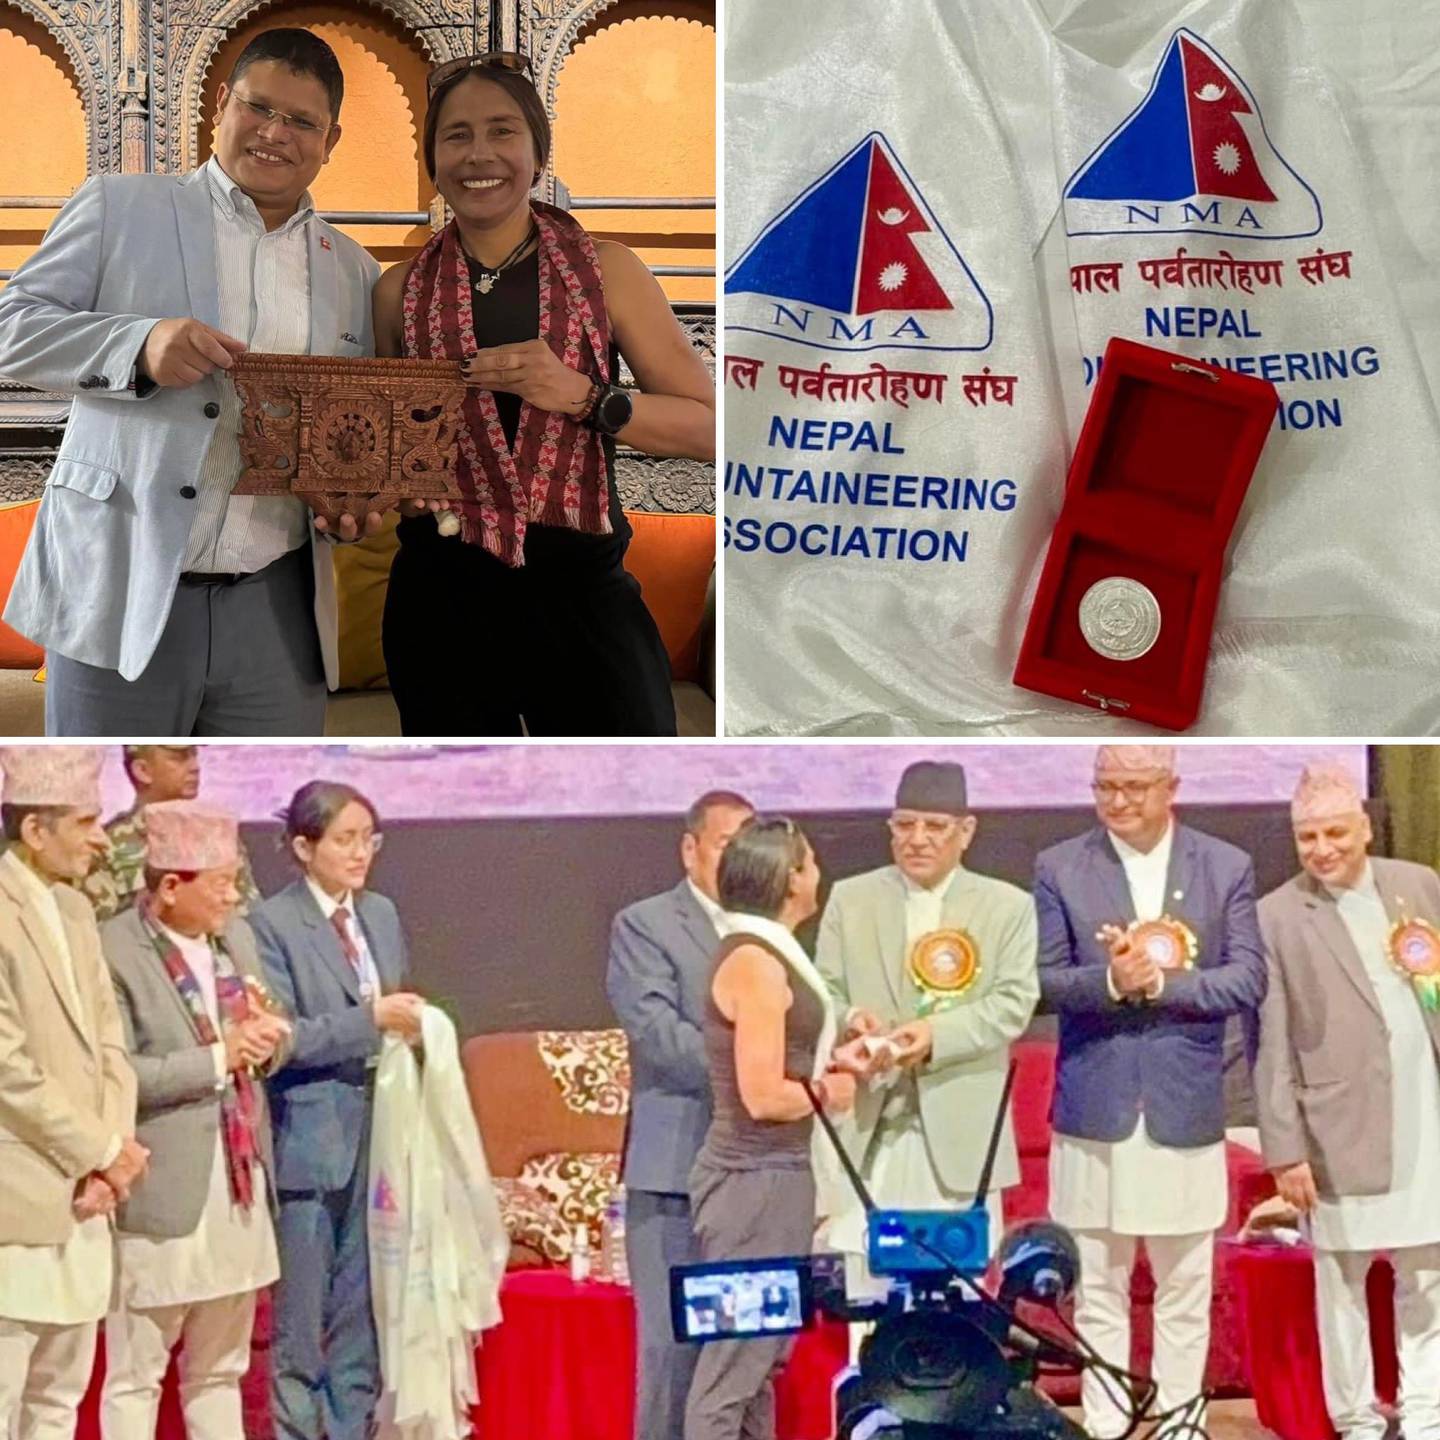 Ligia Madrigal recibió una medalla y una bufanda del primer ministro de Nepal, Pushpa Kamal Dahal, por ser la primera mujer costarricense que llega a la cima del Monte Everest. (Foto: tomada de X, @lajornadacrc)